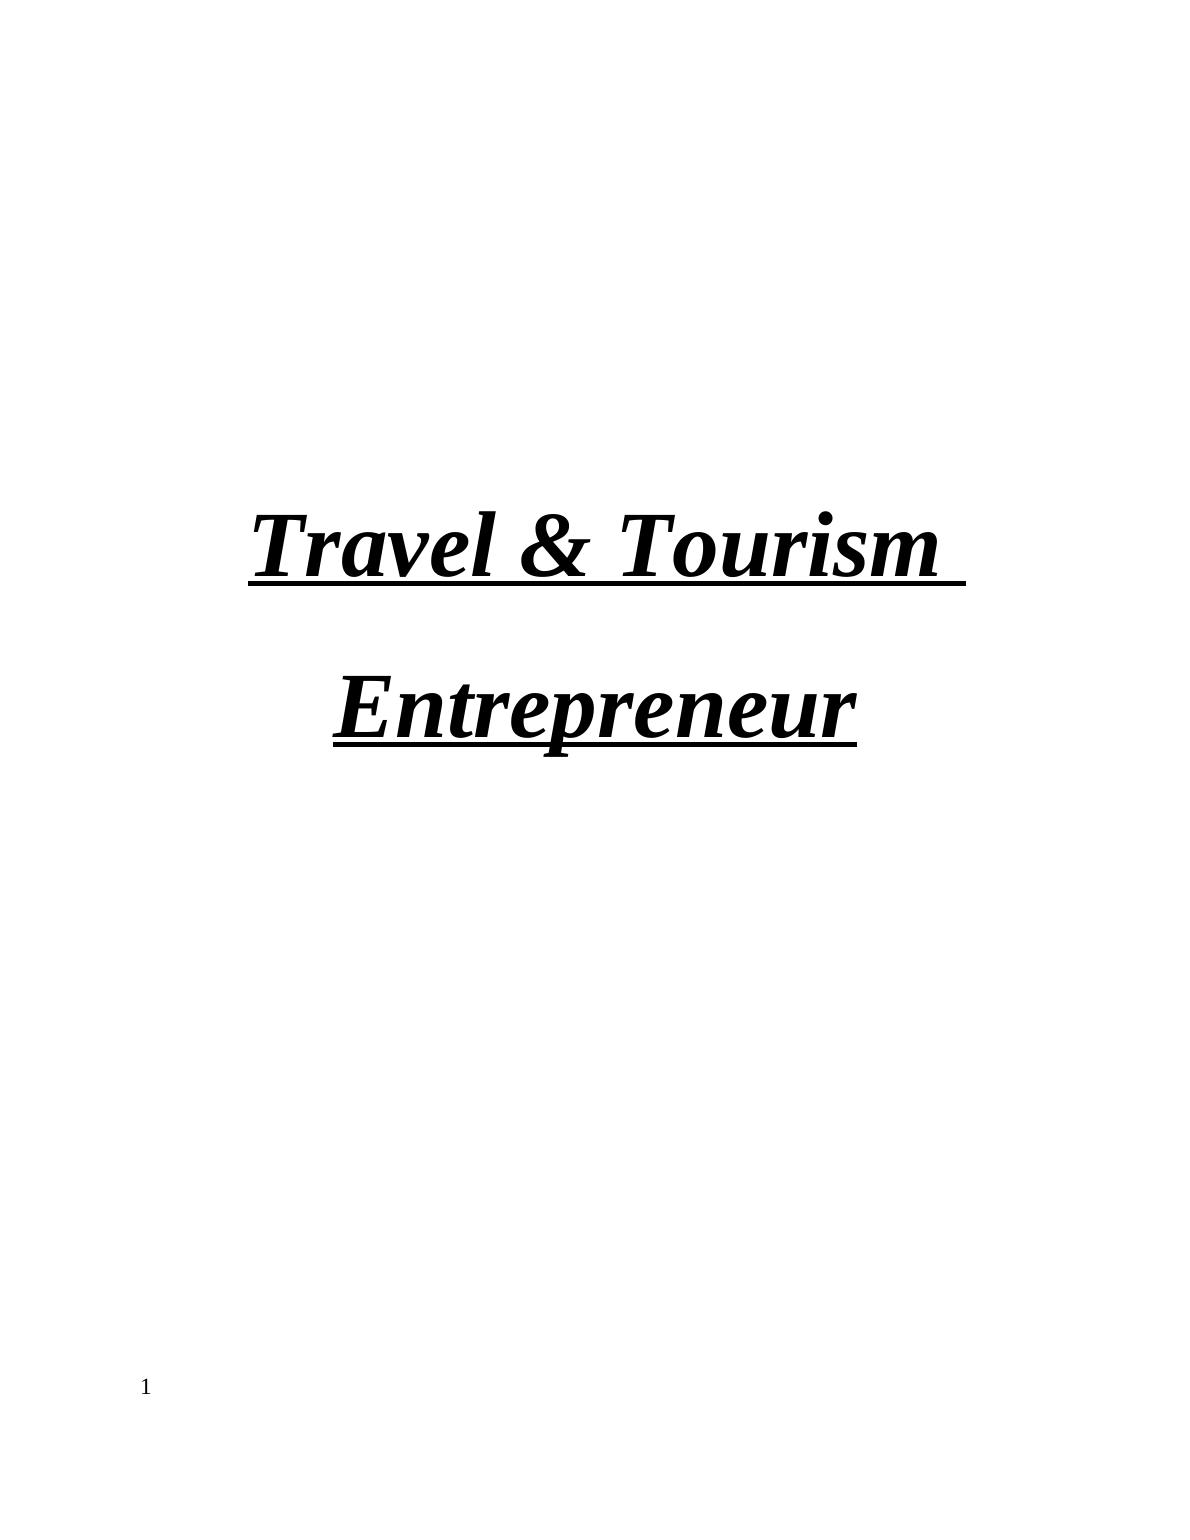 Travel & Tourism Entrepreneur Assignment_1